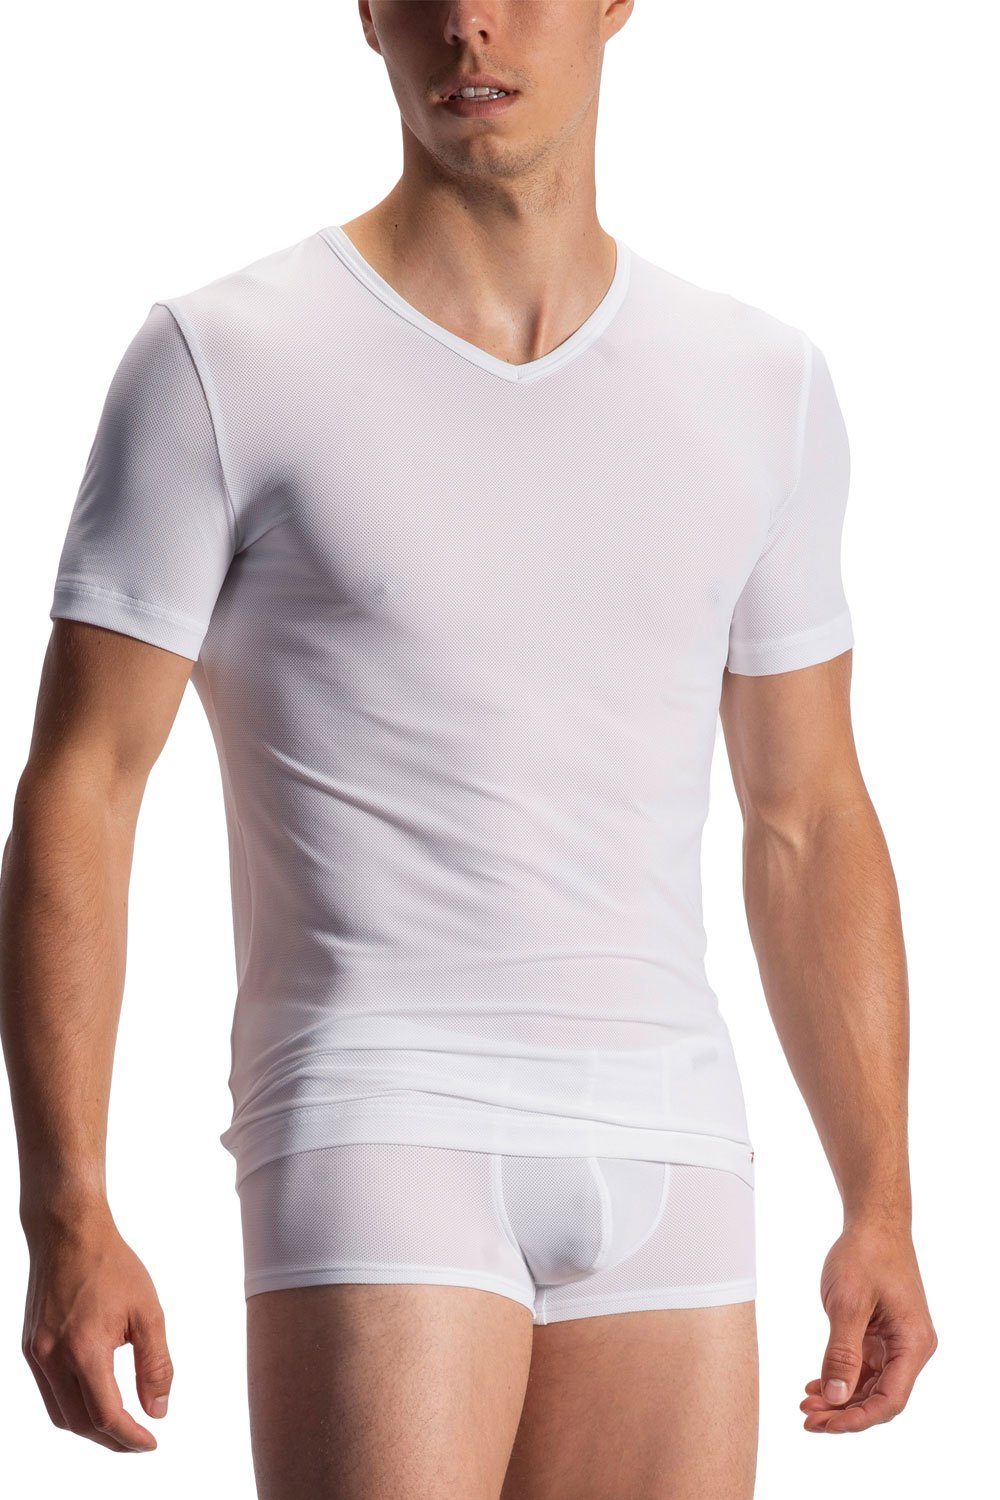 Olaf Benz T-Shirt Shirt V-Neck (Reg) 108404 white